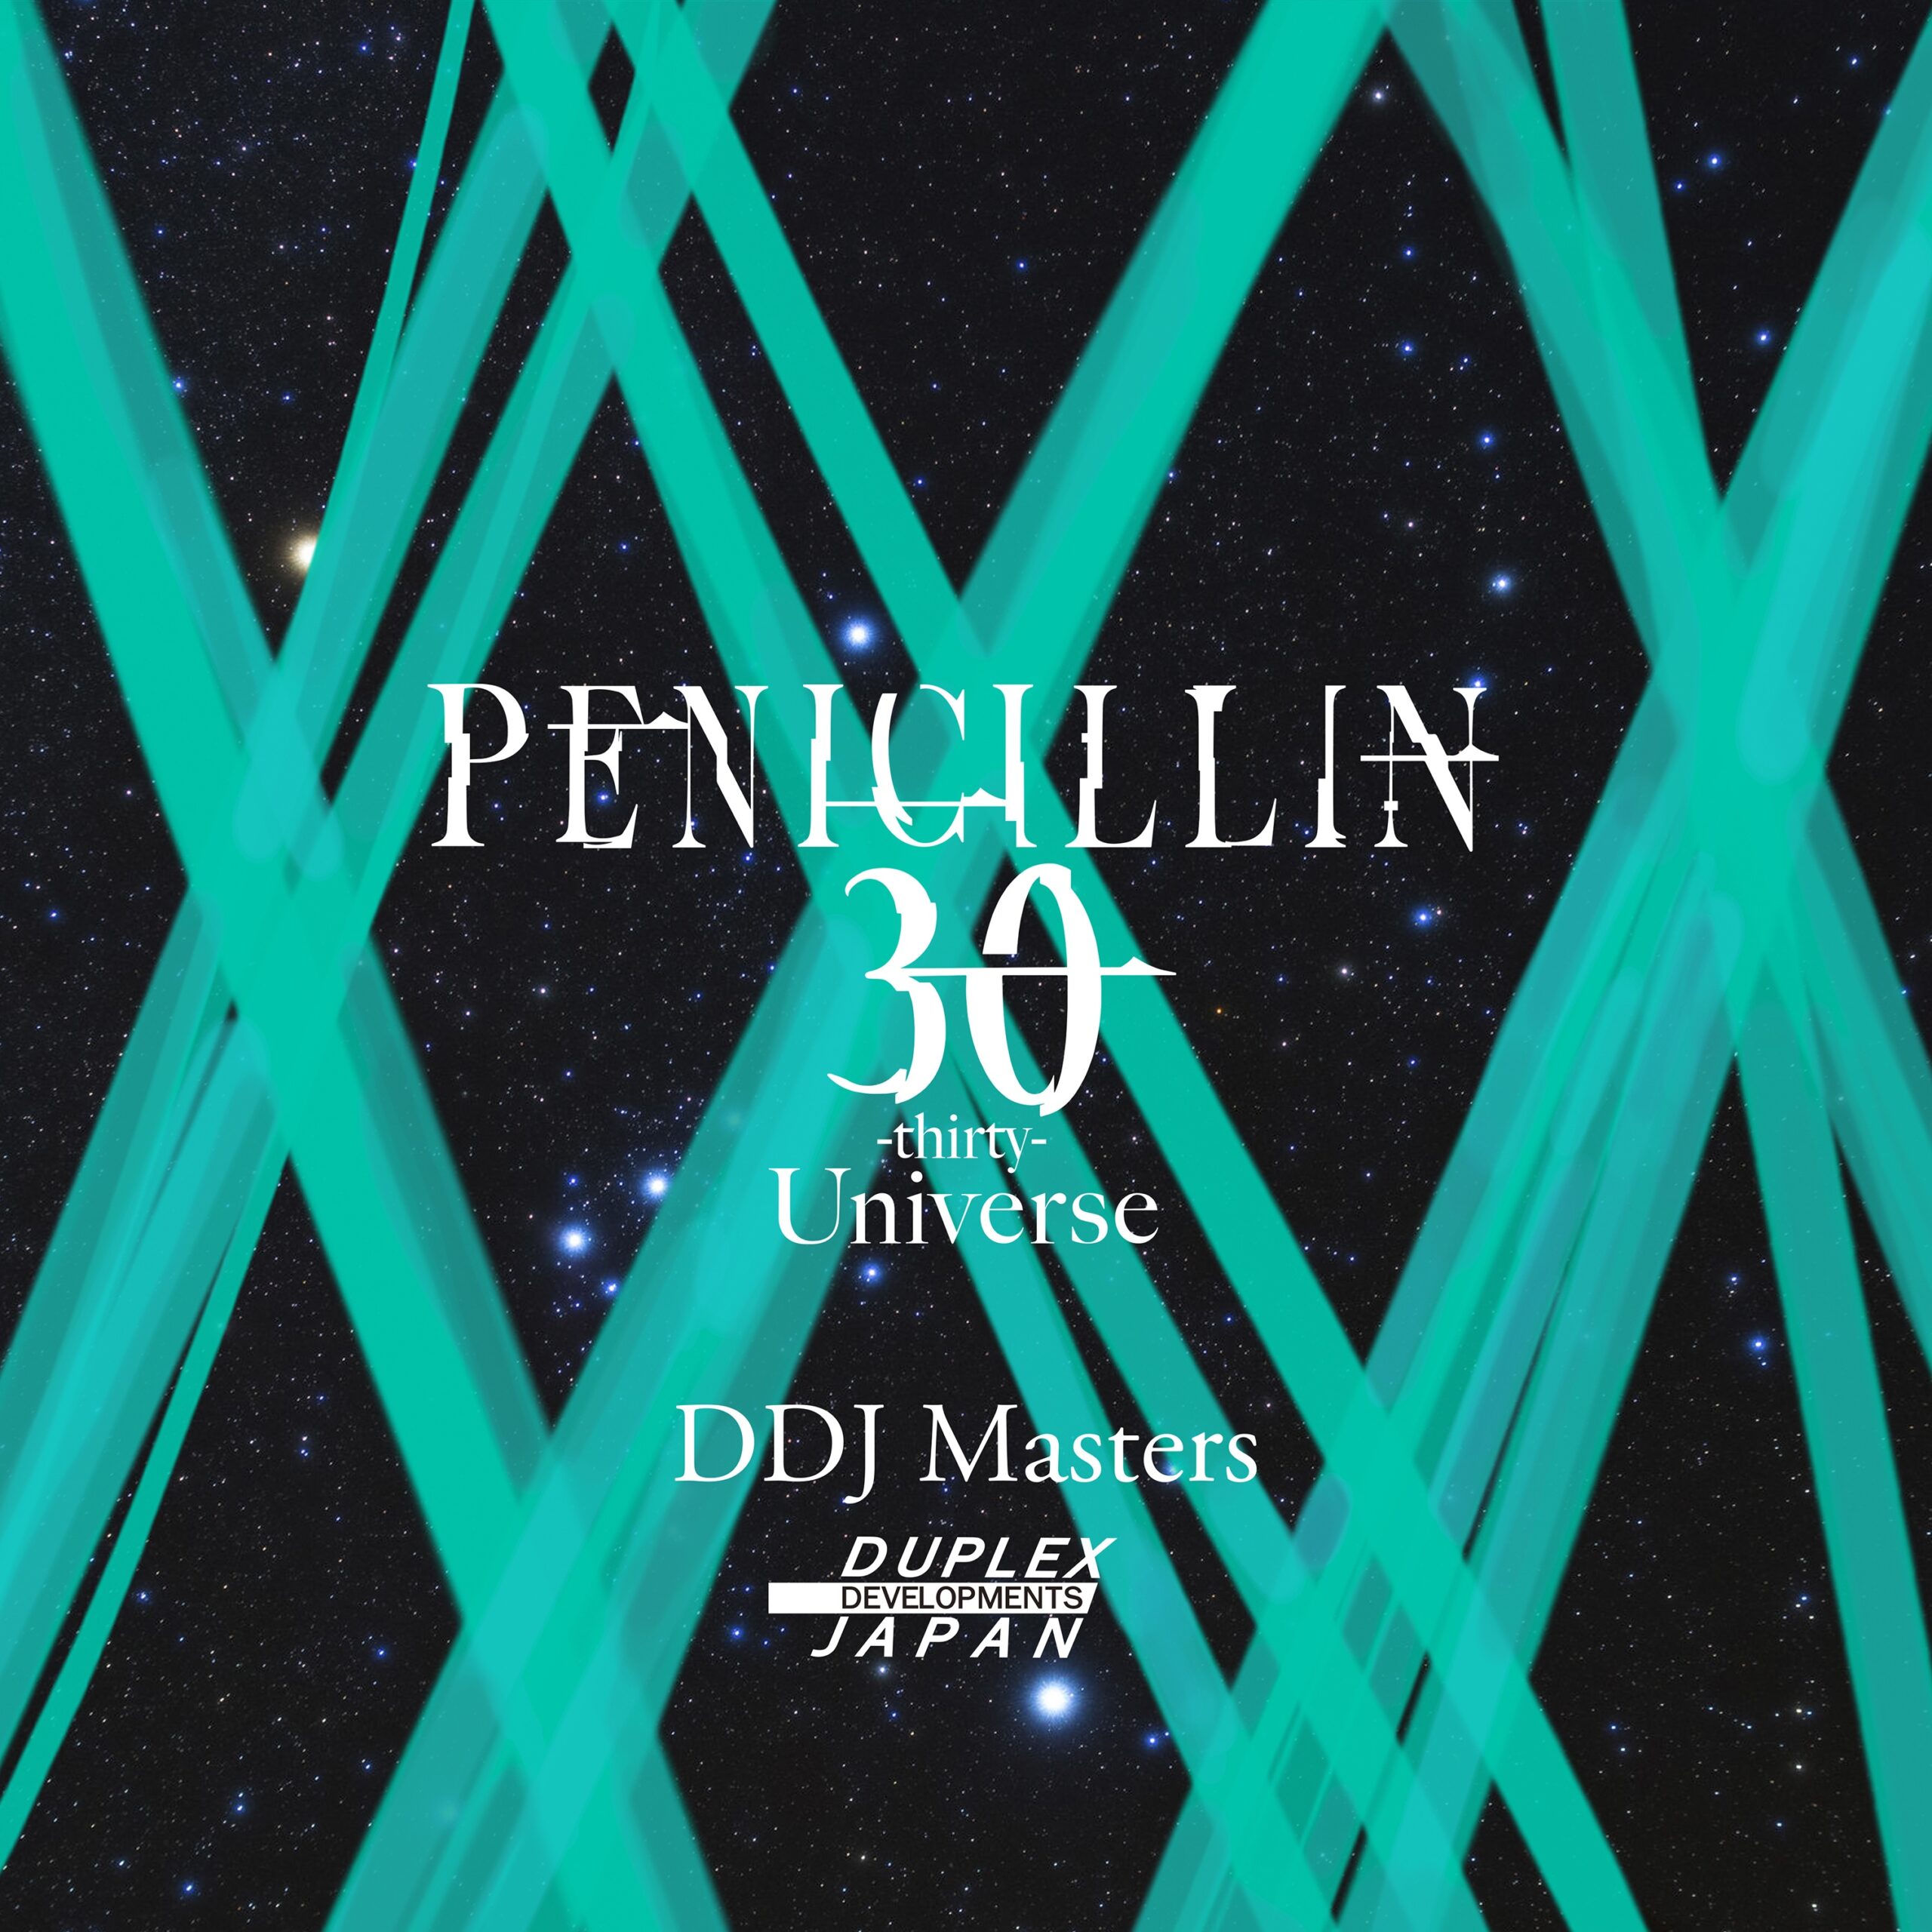 30 -thirty- Universe  DDJ Masters